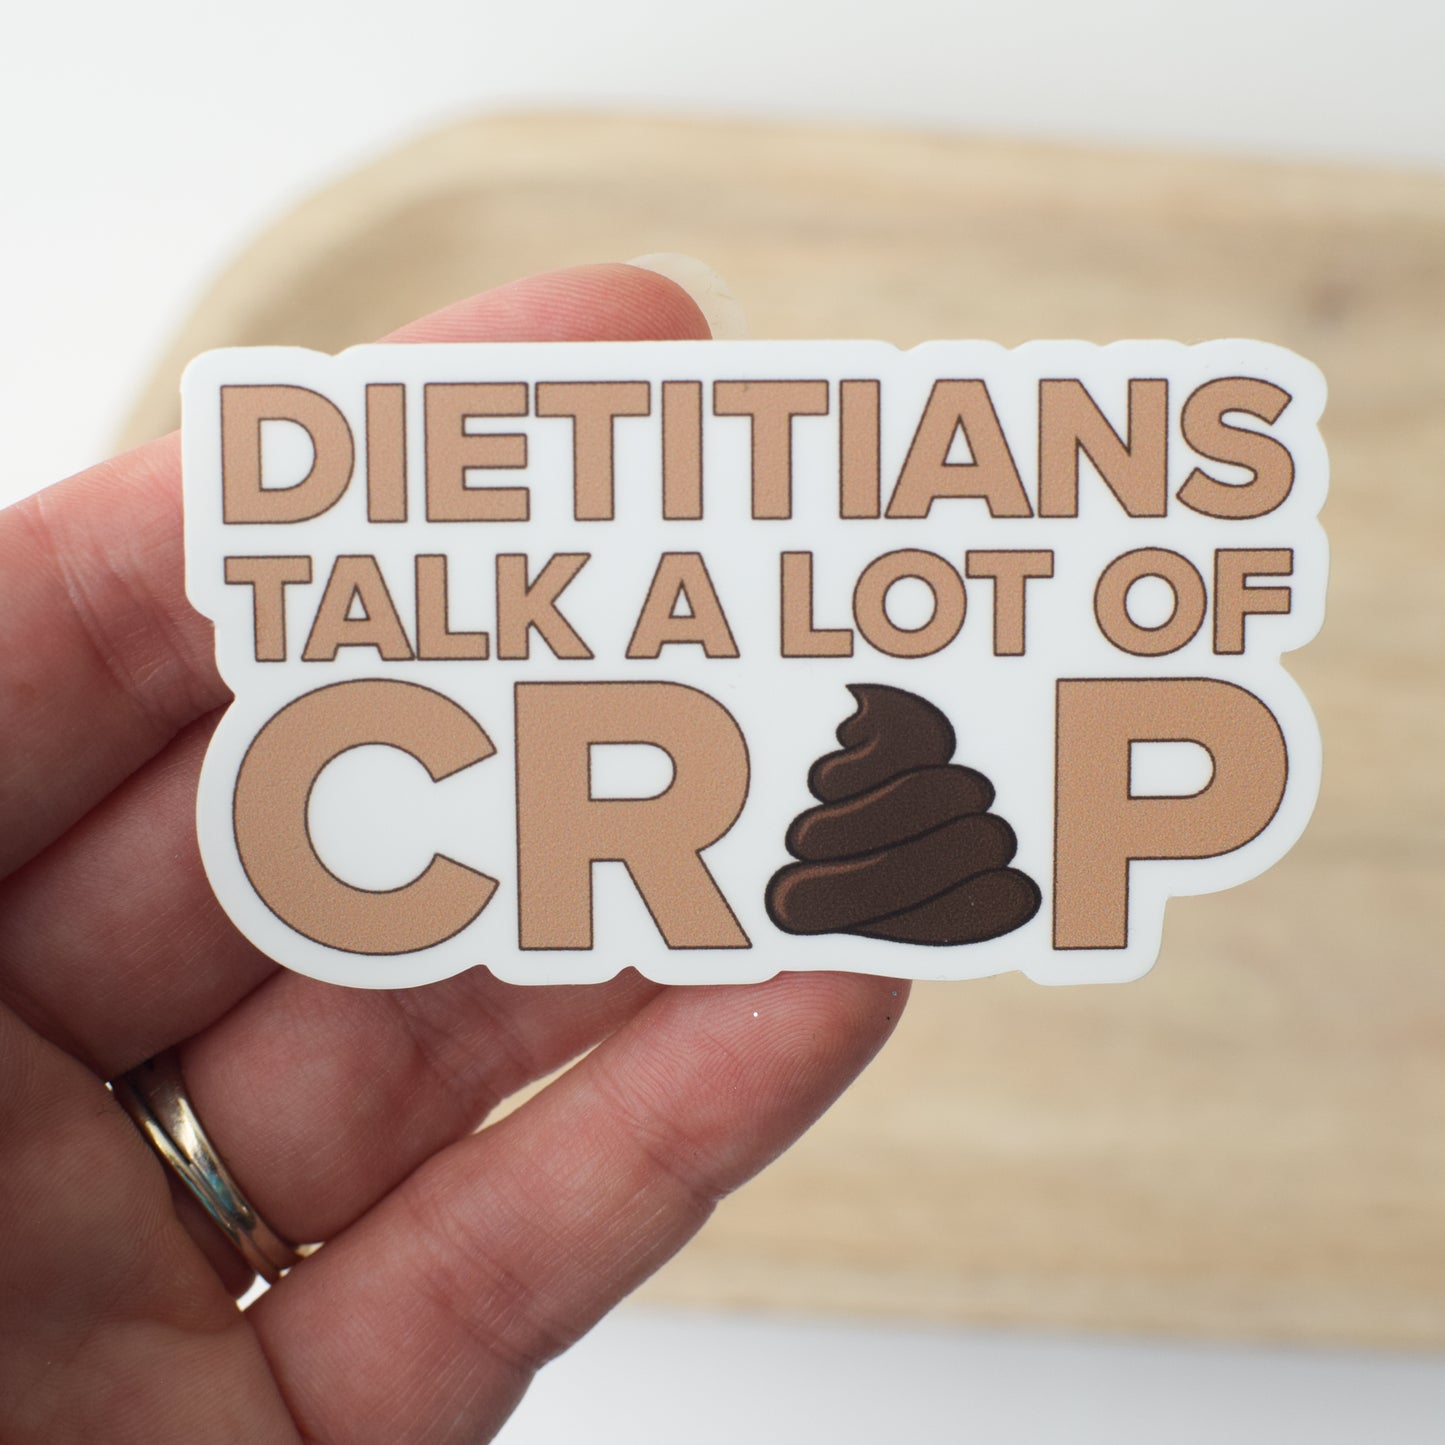 Dietitians Talk a Lot of Crap Sticker